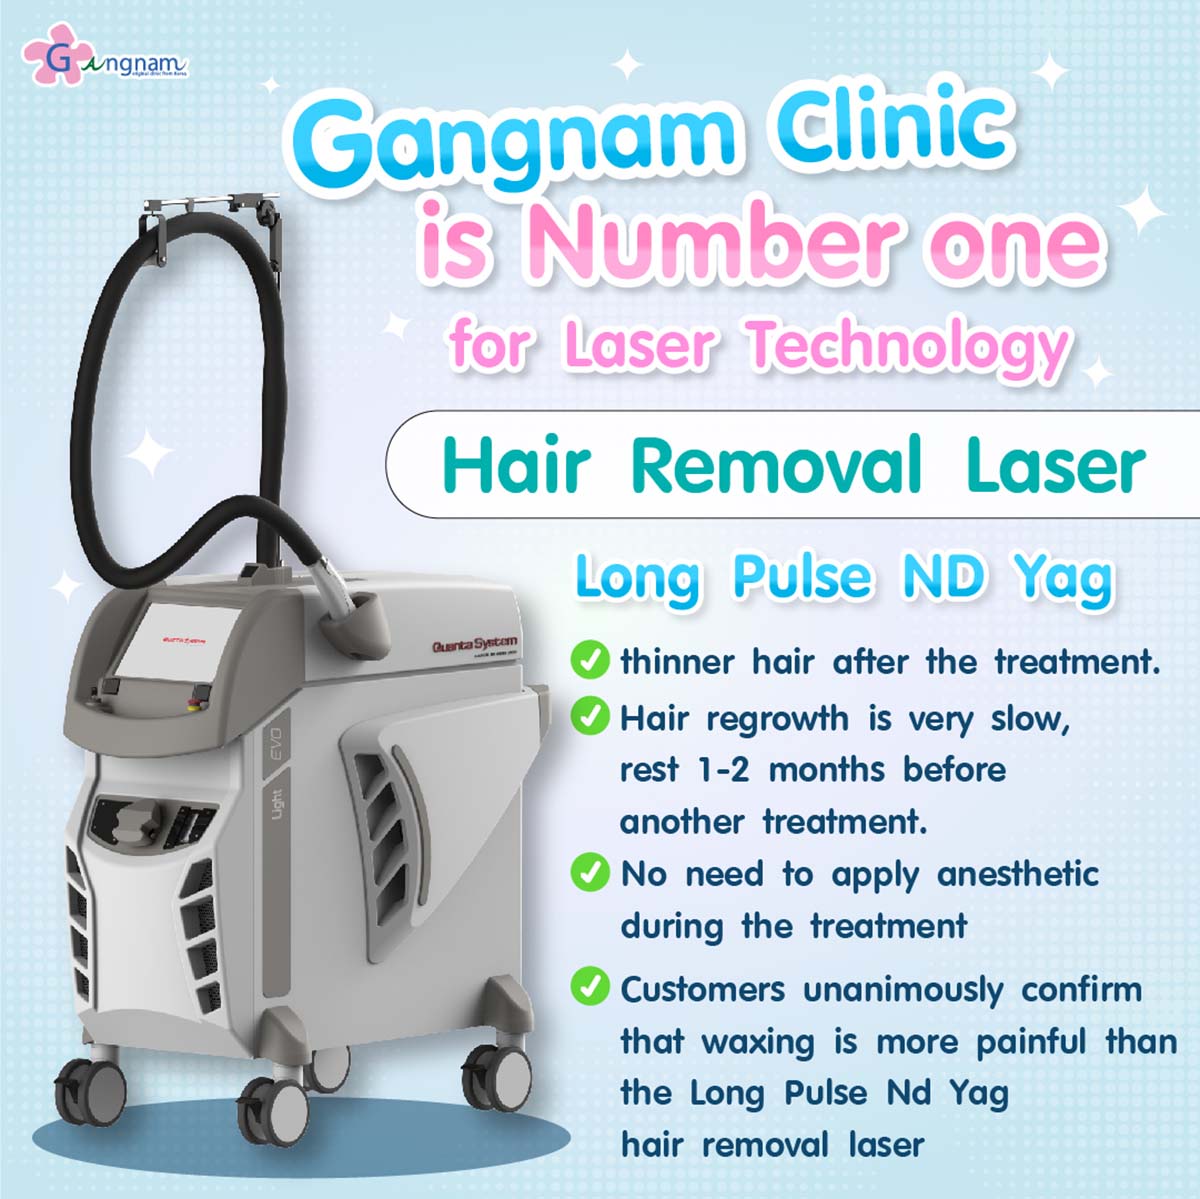 Long Pulse ND Yag hair removal laser